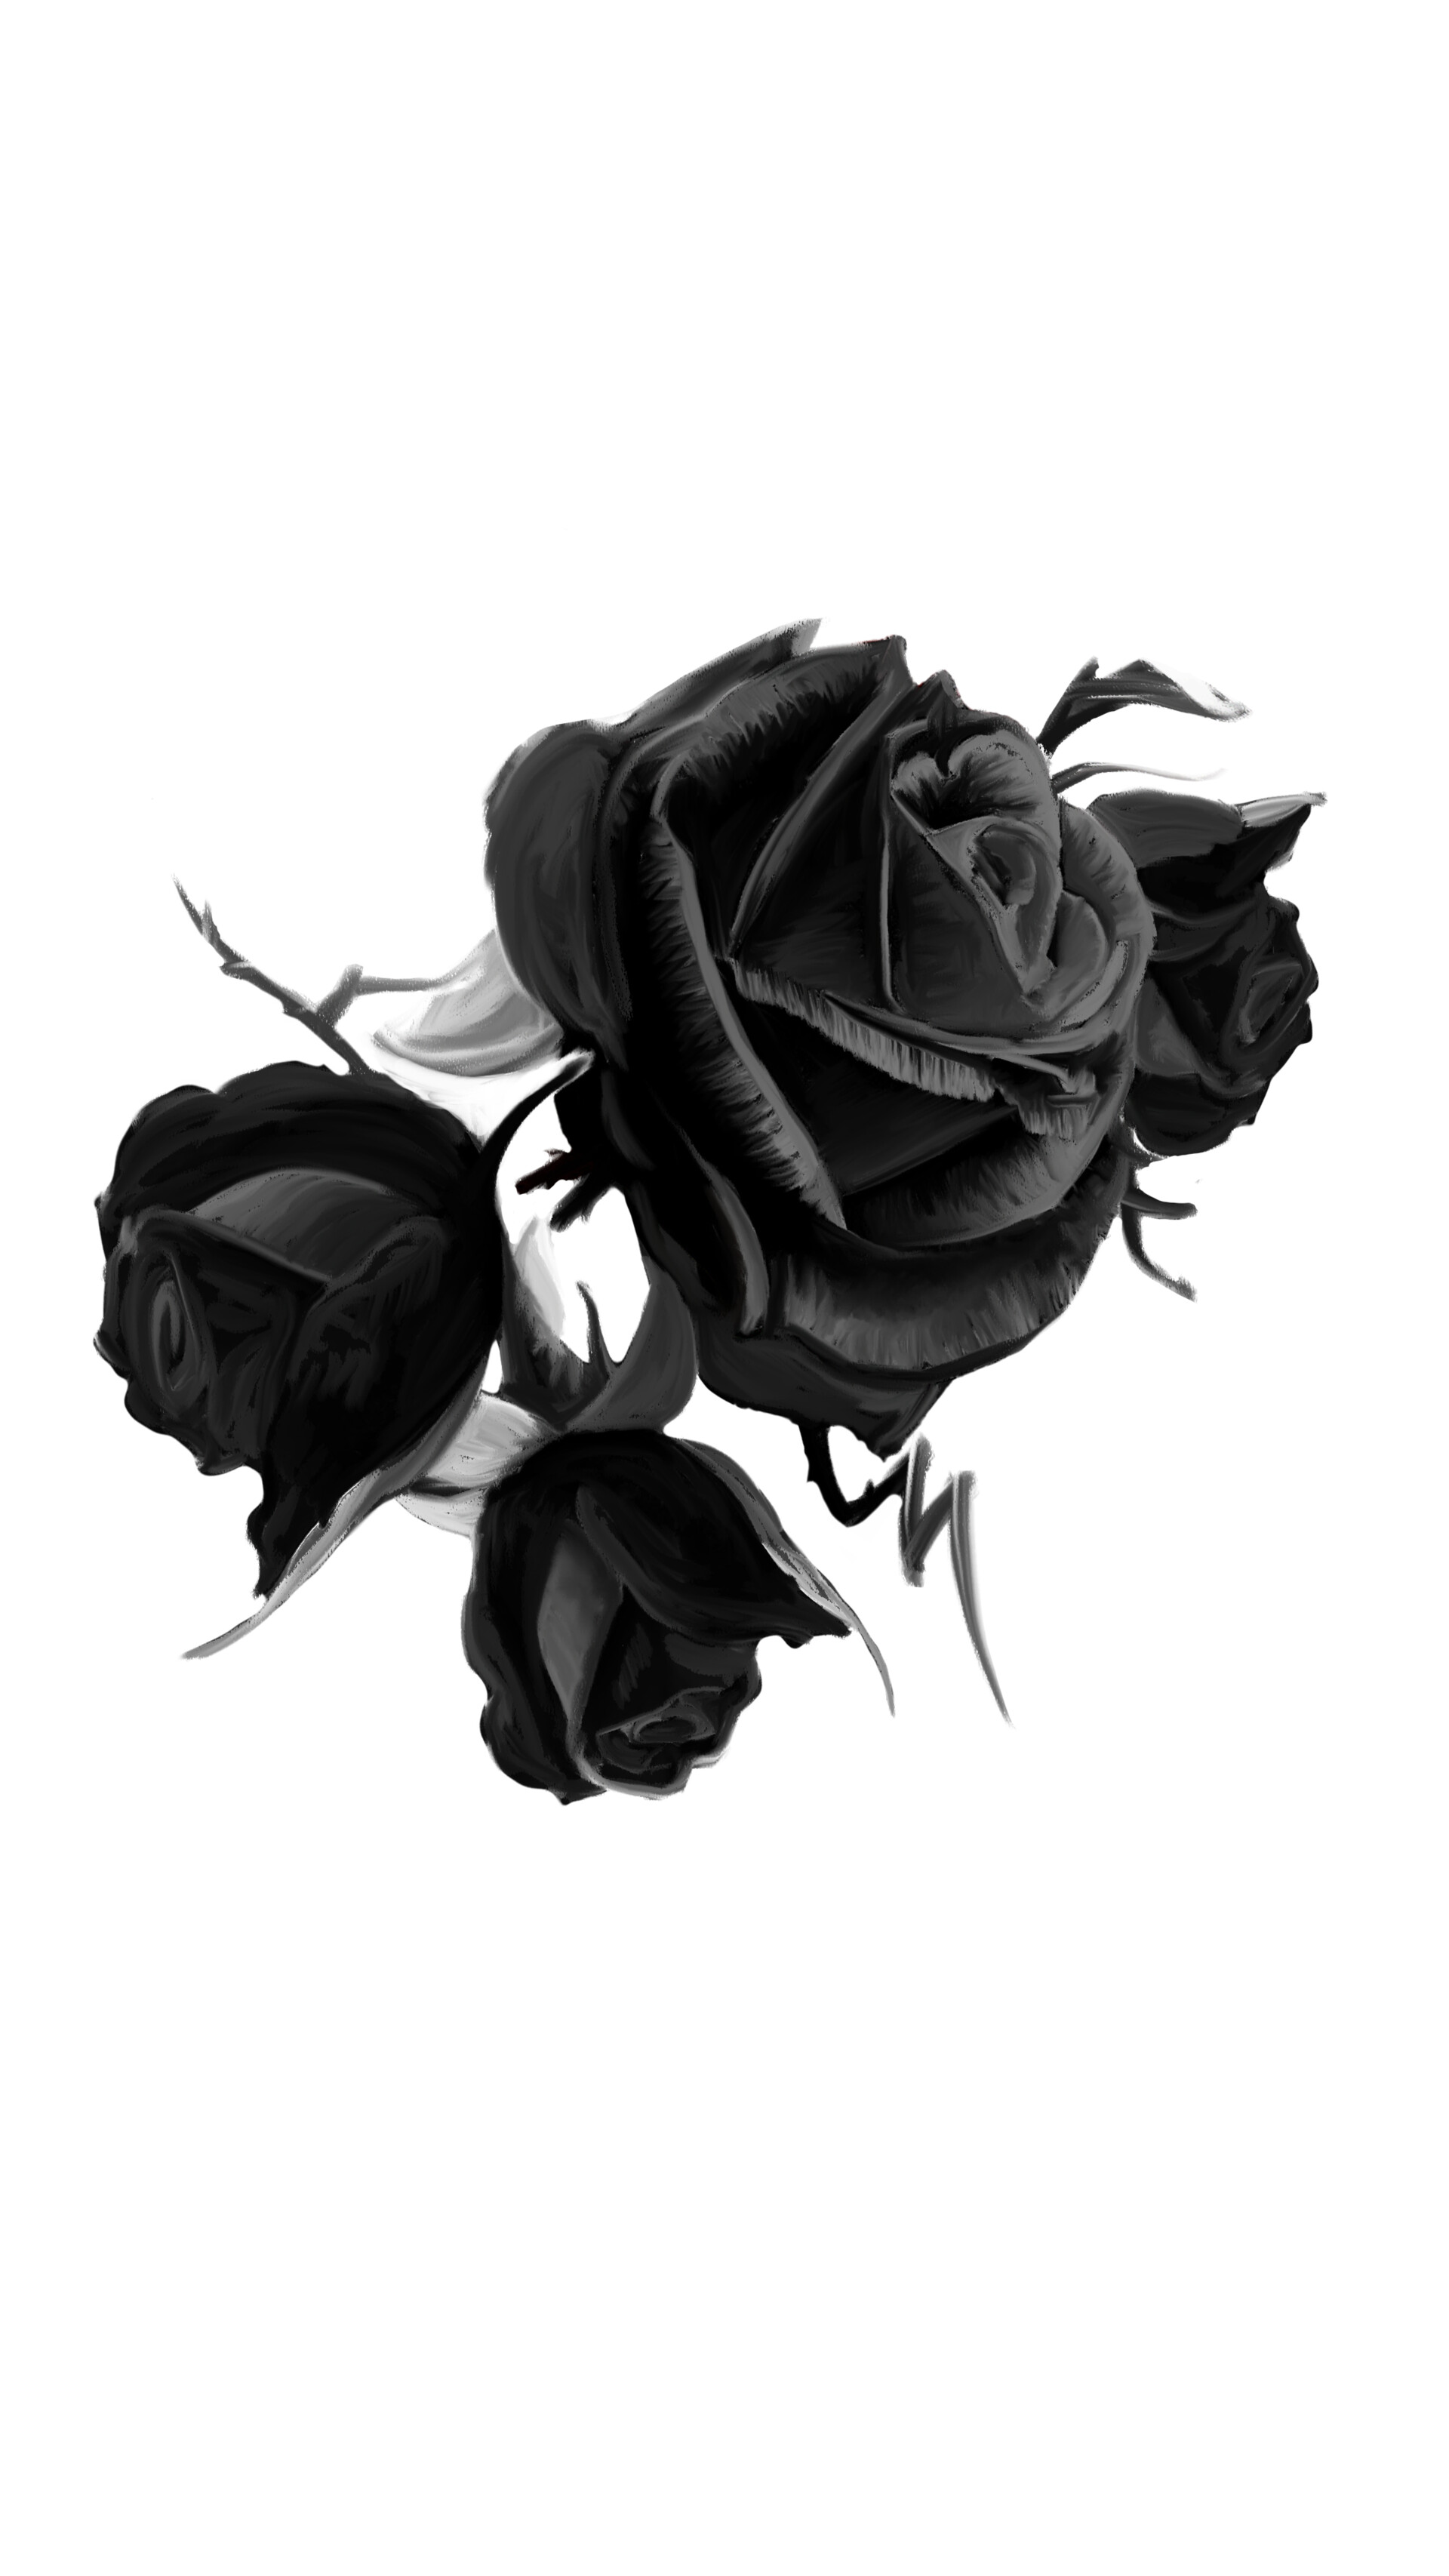 ArtStation - Black rose memorial_homer